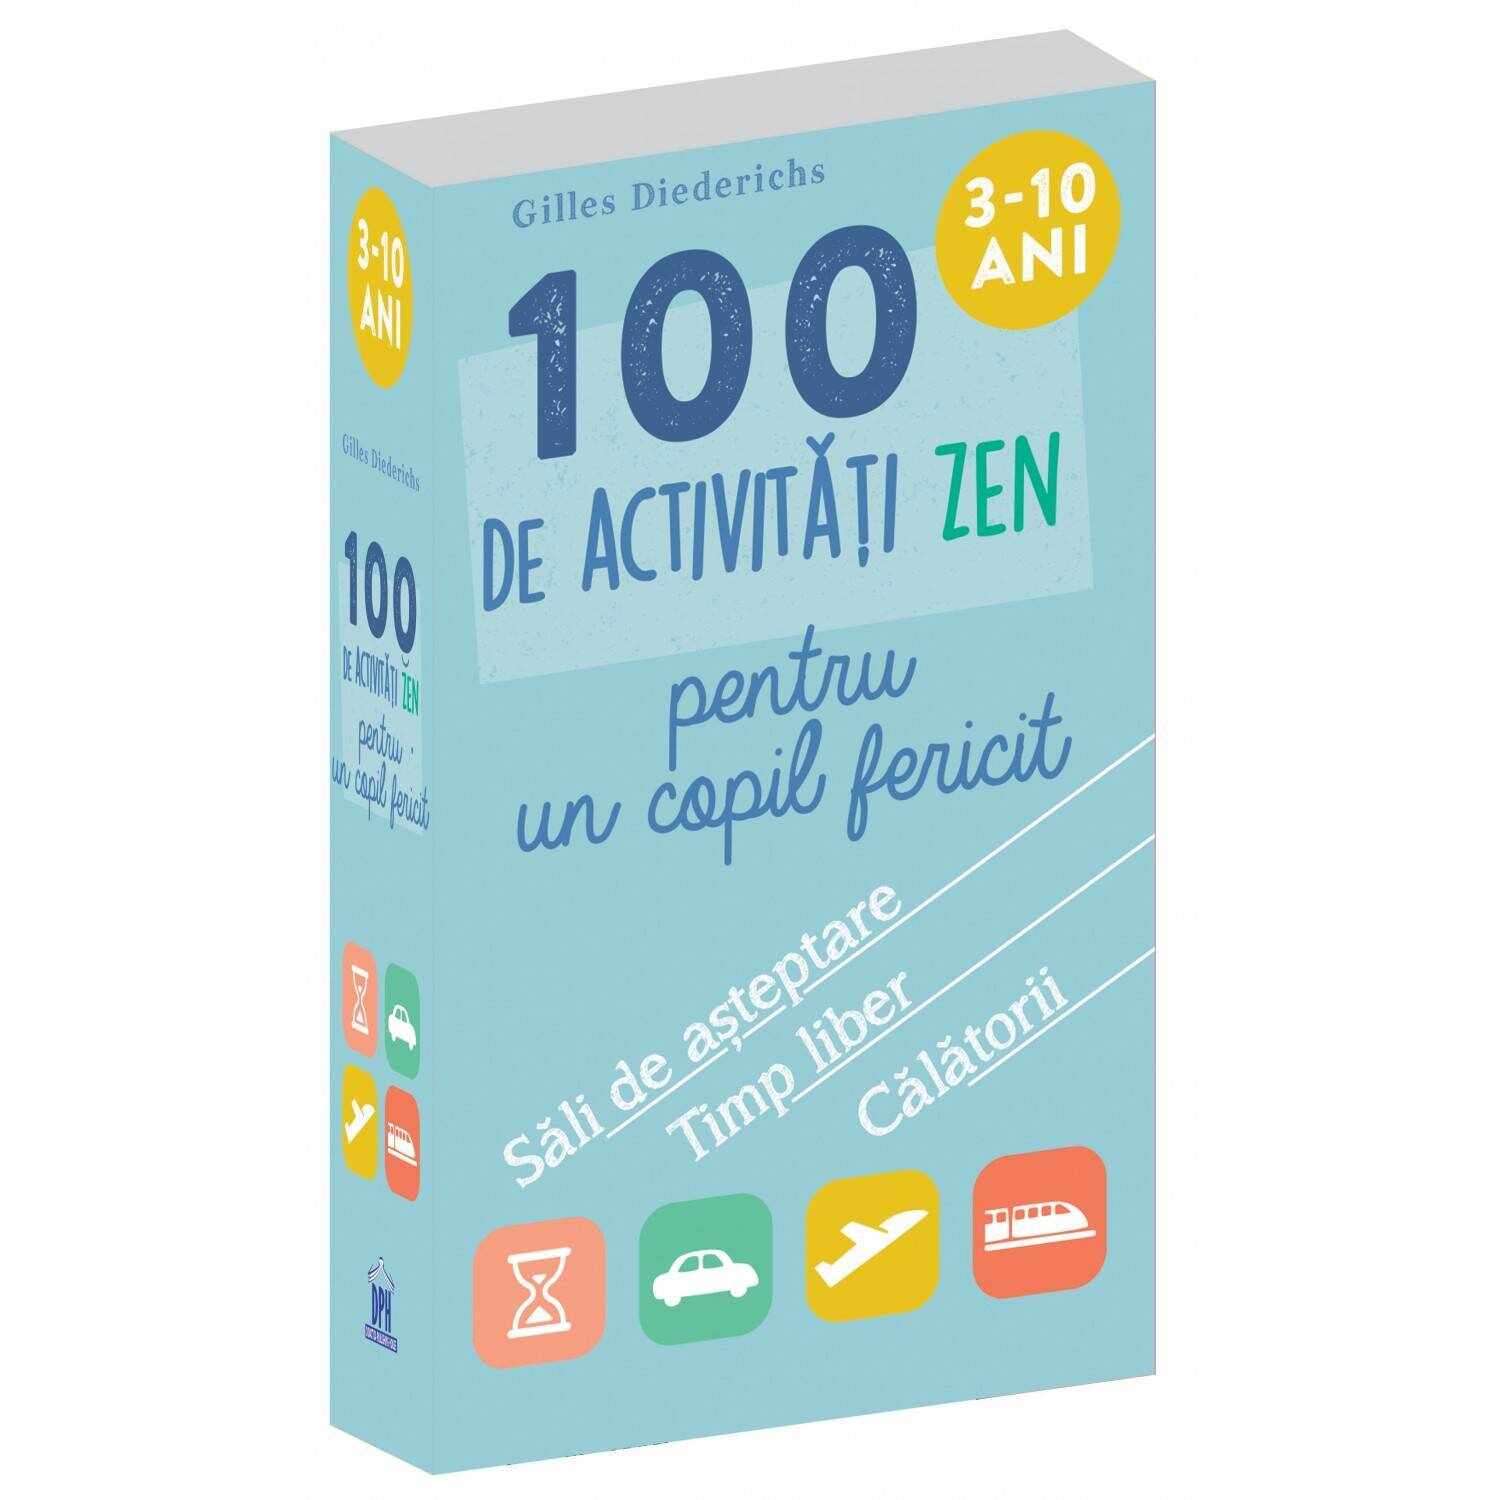 Jetoane 100 de activitati zen pentru un copil fericit - Gilles Diederichs - DPH